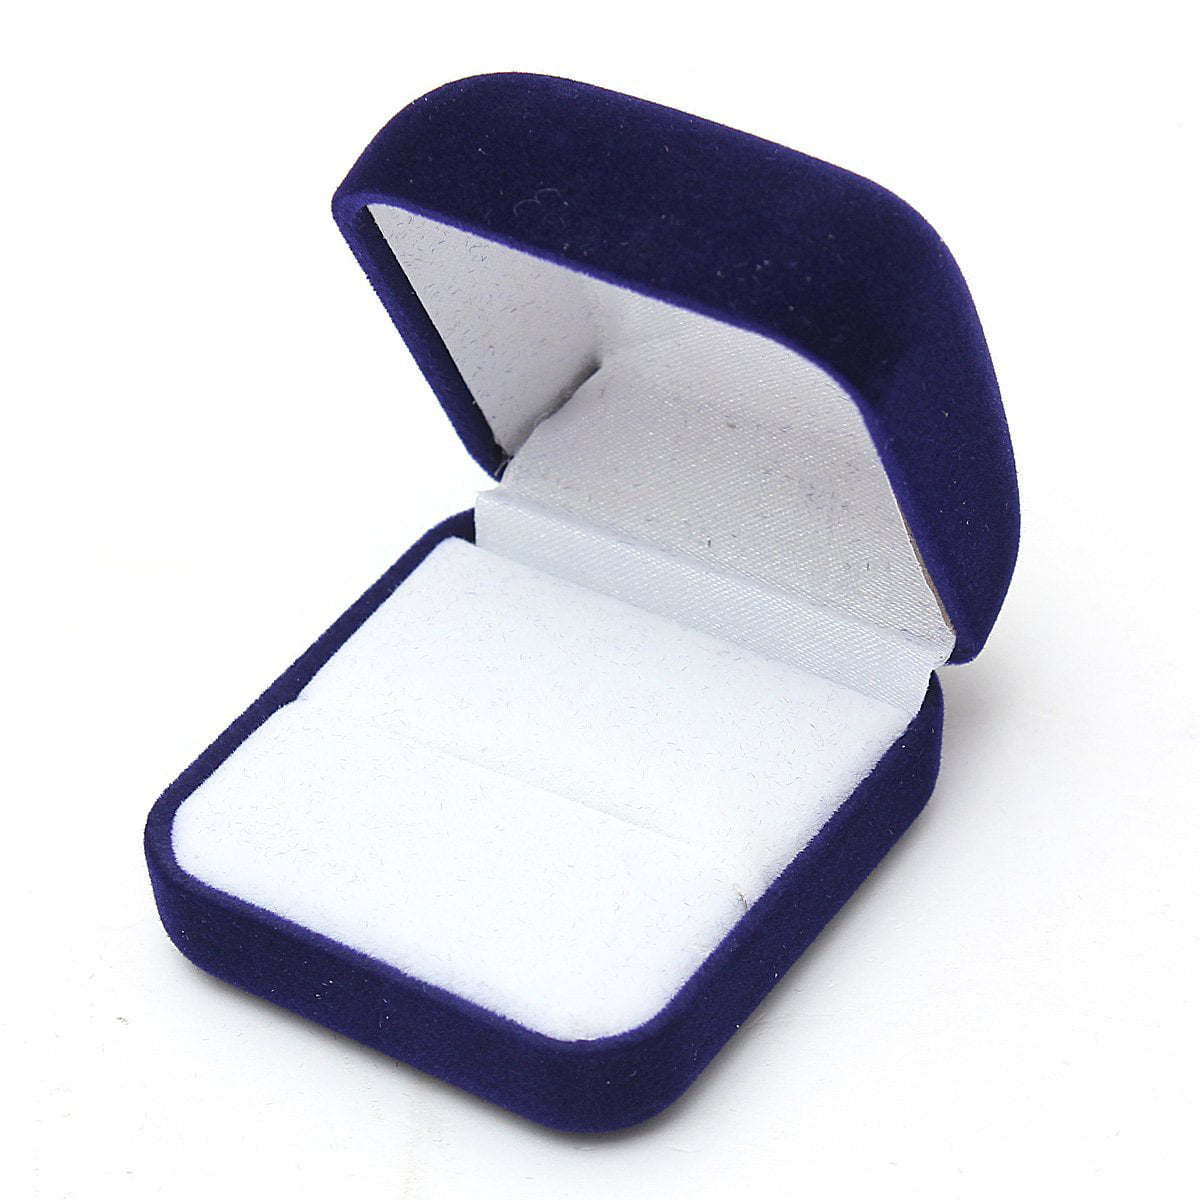 2C 1X 1 Jewel case box blue gift rings earrings jewelry velvet display Q2S7 